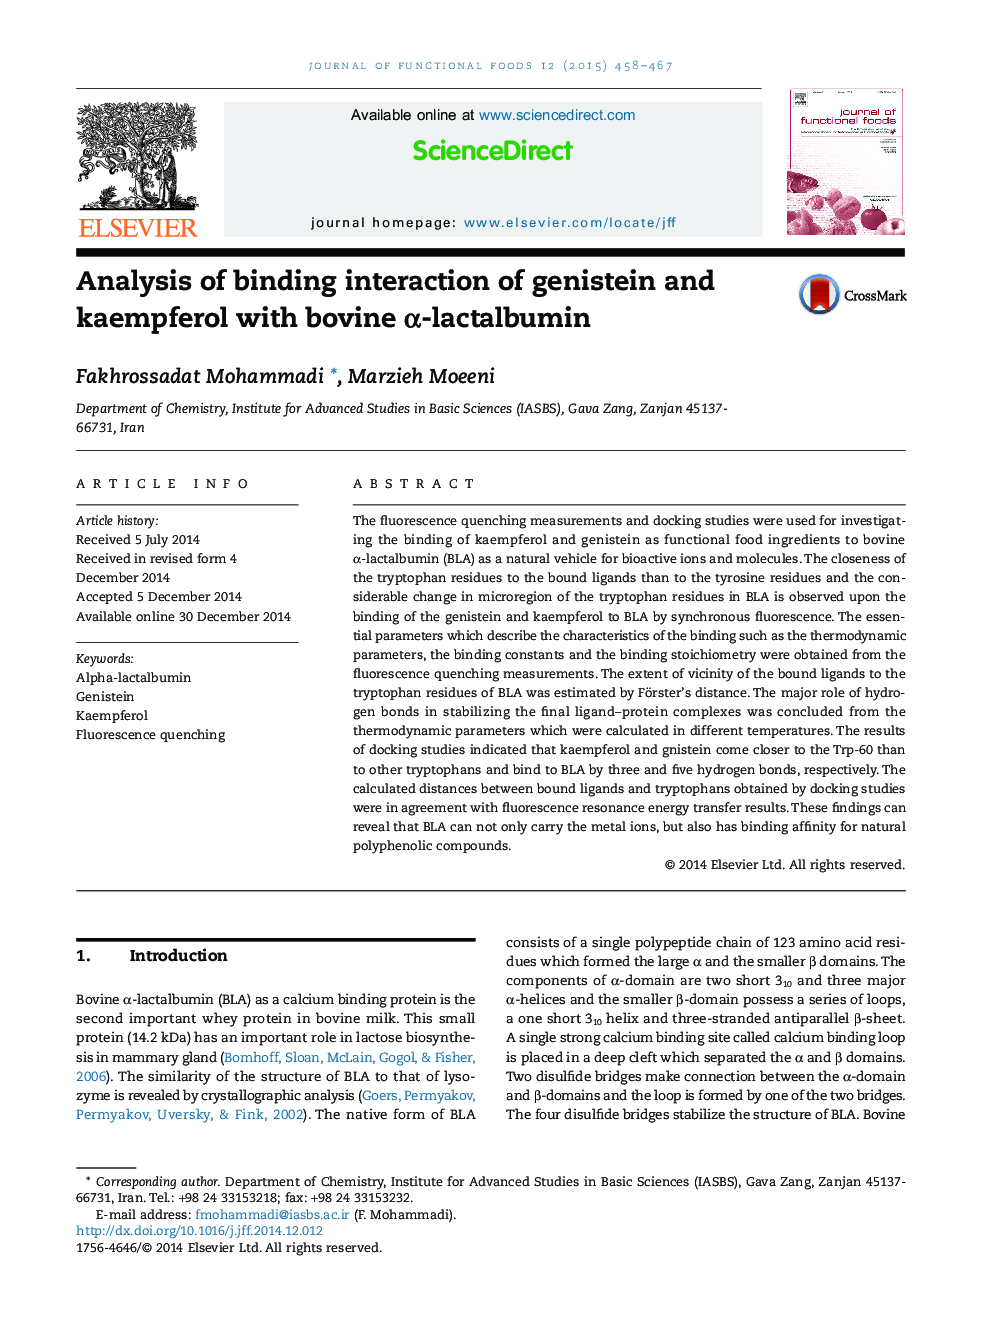 Analysis of binding interaction of genistein and kaempferol with bovine α-lactalbumin